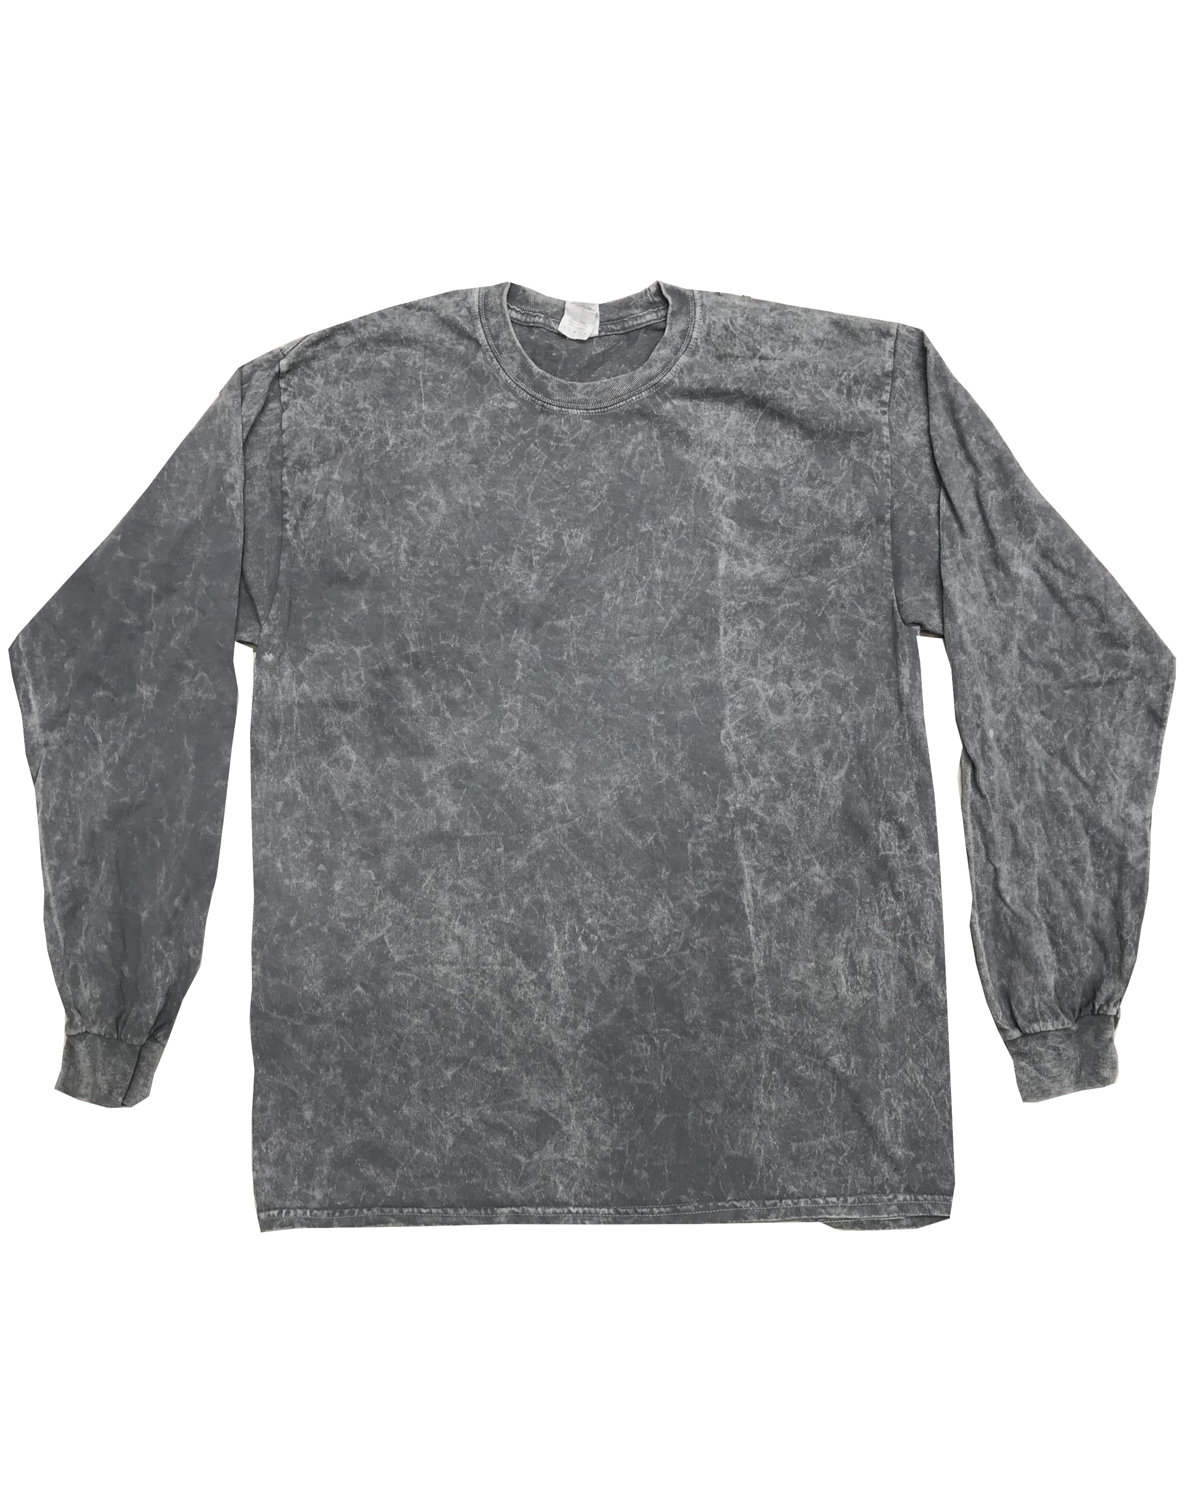 Tye Dye Long Sleeve – T-shirts Matter